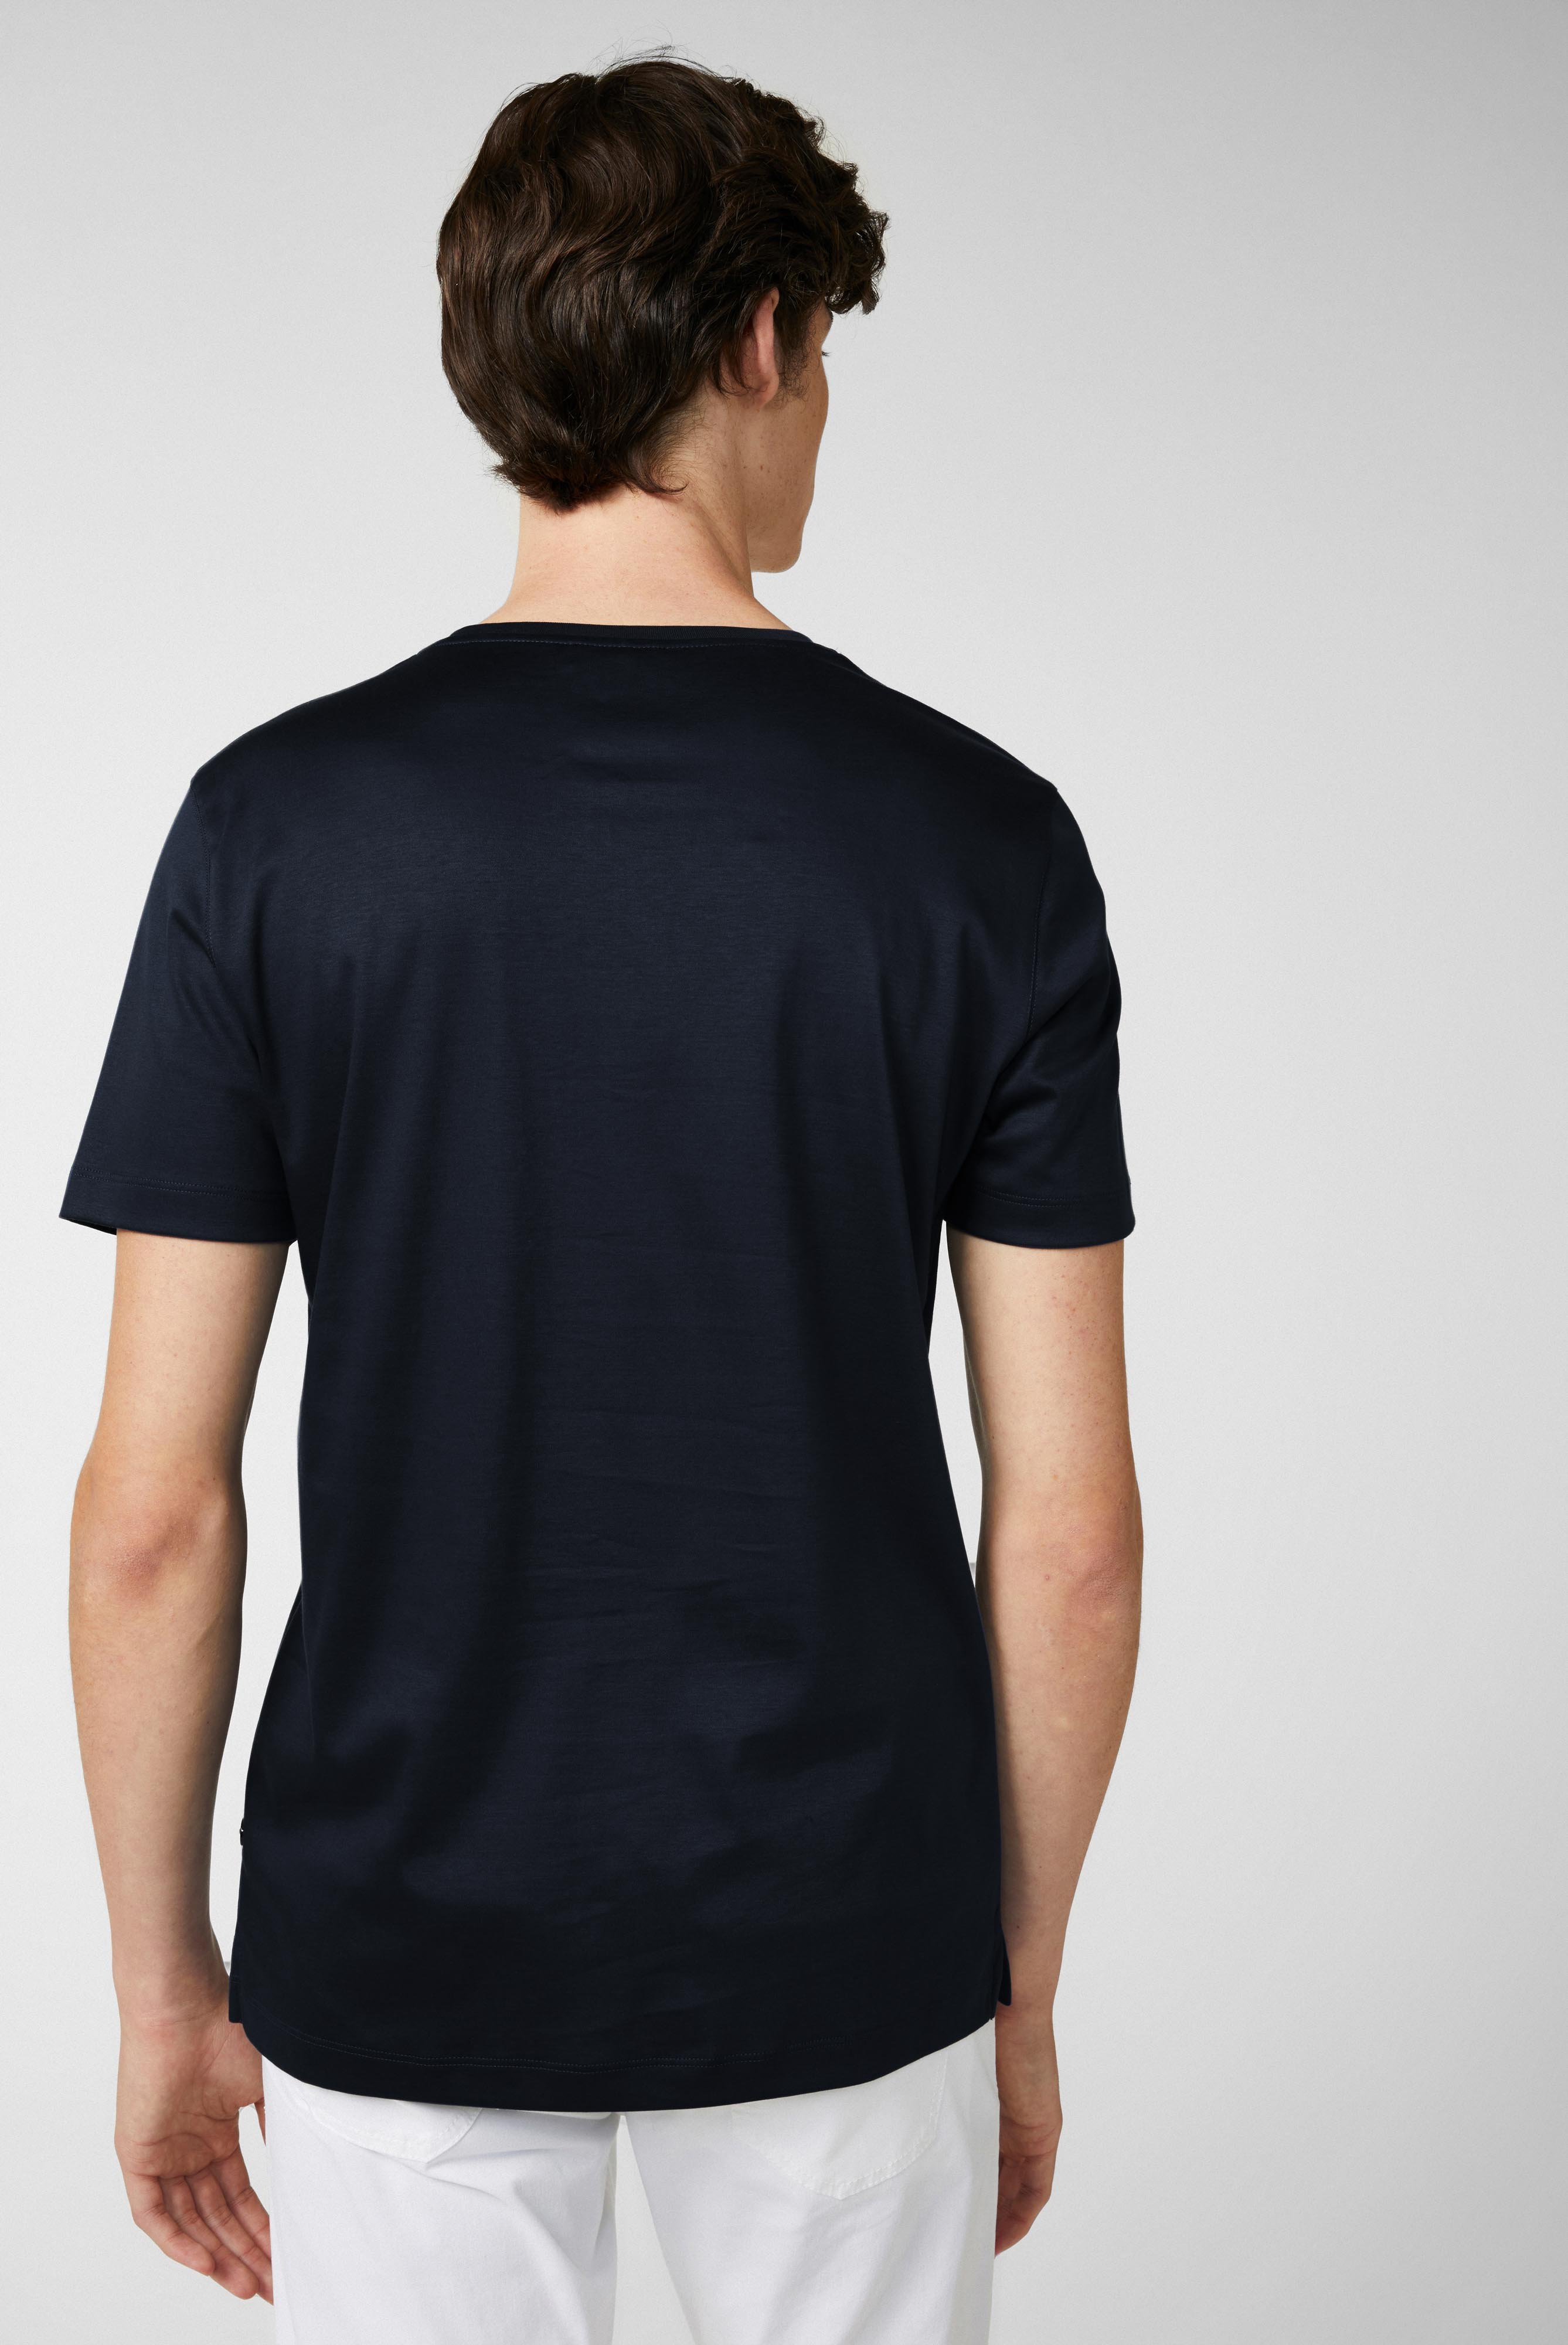 T-Shirts+Swiss Cotton Jersey Crew Neck T-Shirt+20.1717.UX.180031.790.X3L